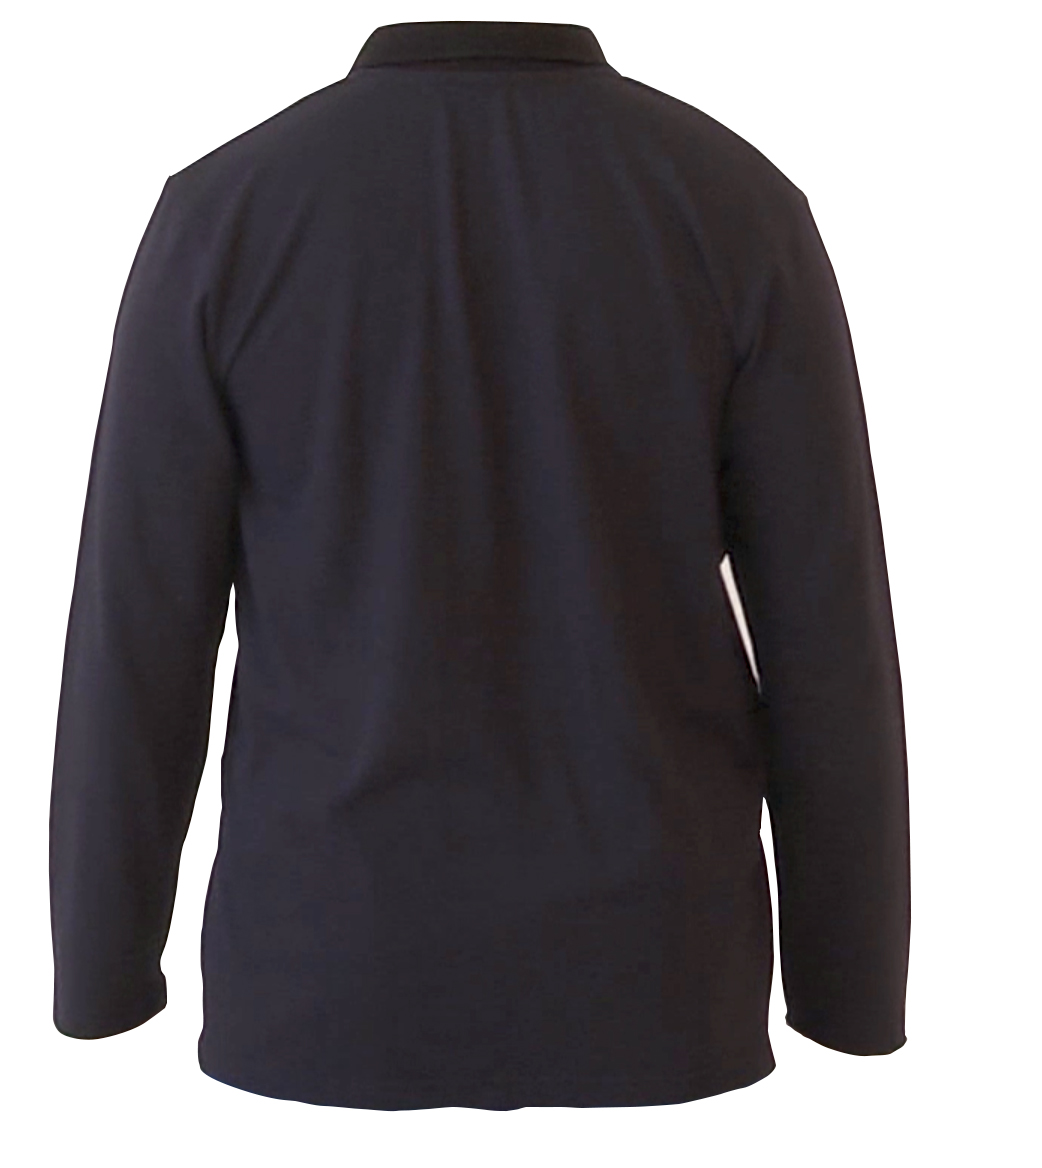 ESD Polo-Shirt Back AQGZ Style Black Unisex 4XL Antistatic Clothing ESD Garment - 473.AQGZ-APS21-BK4